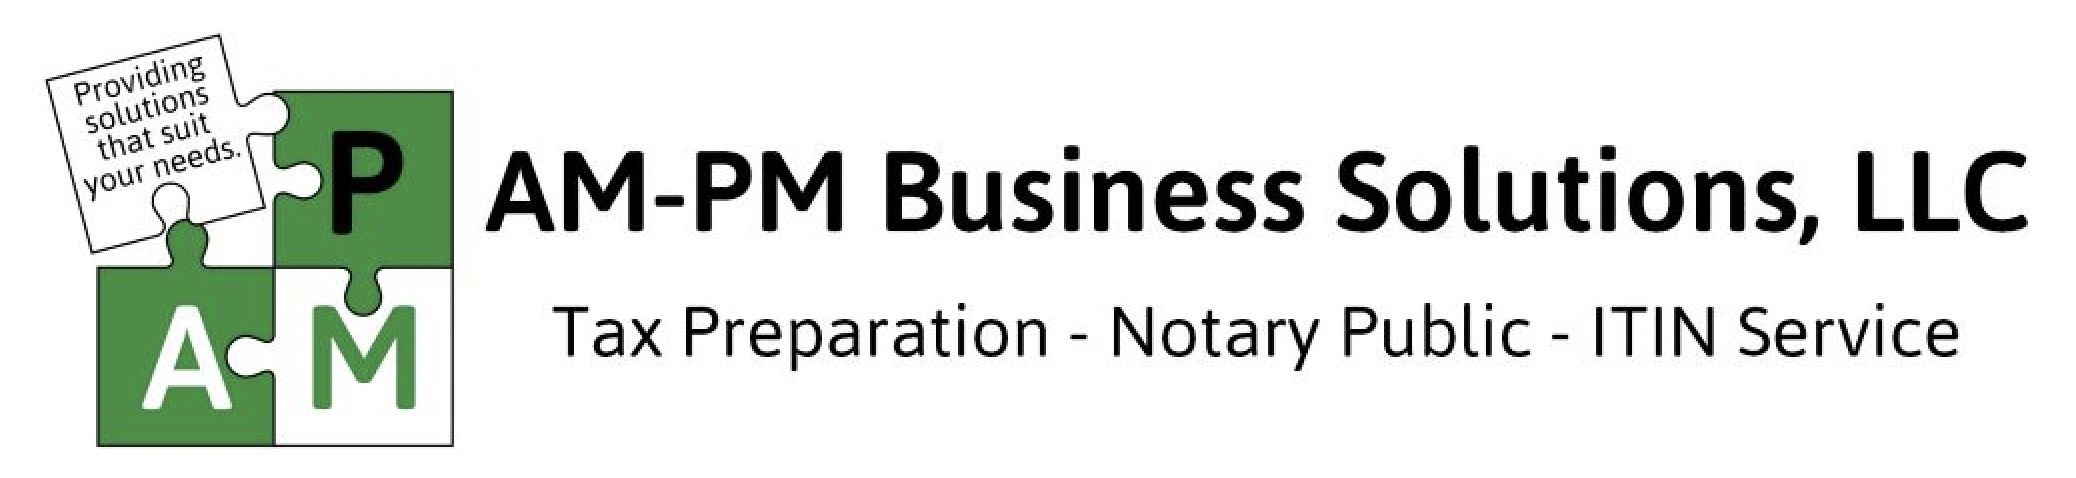 AM-PM Business Solutions, LLC